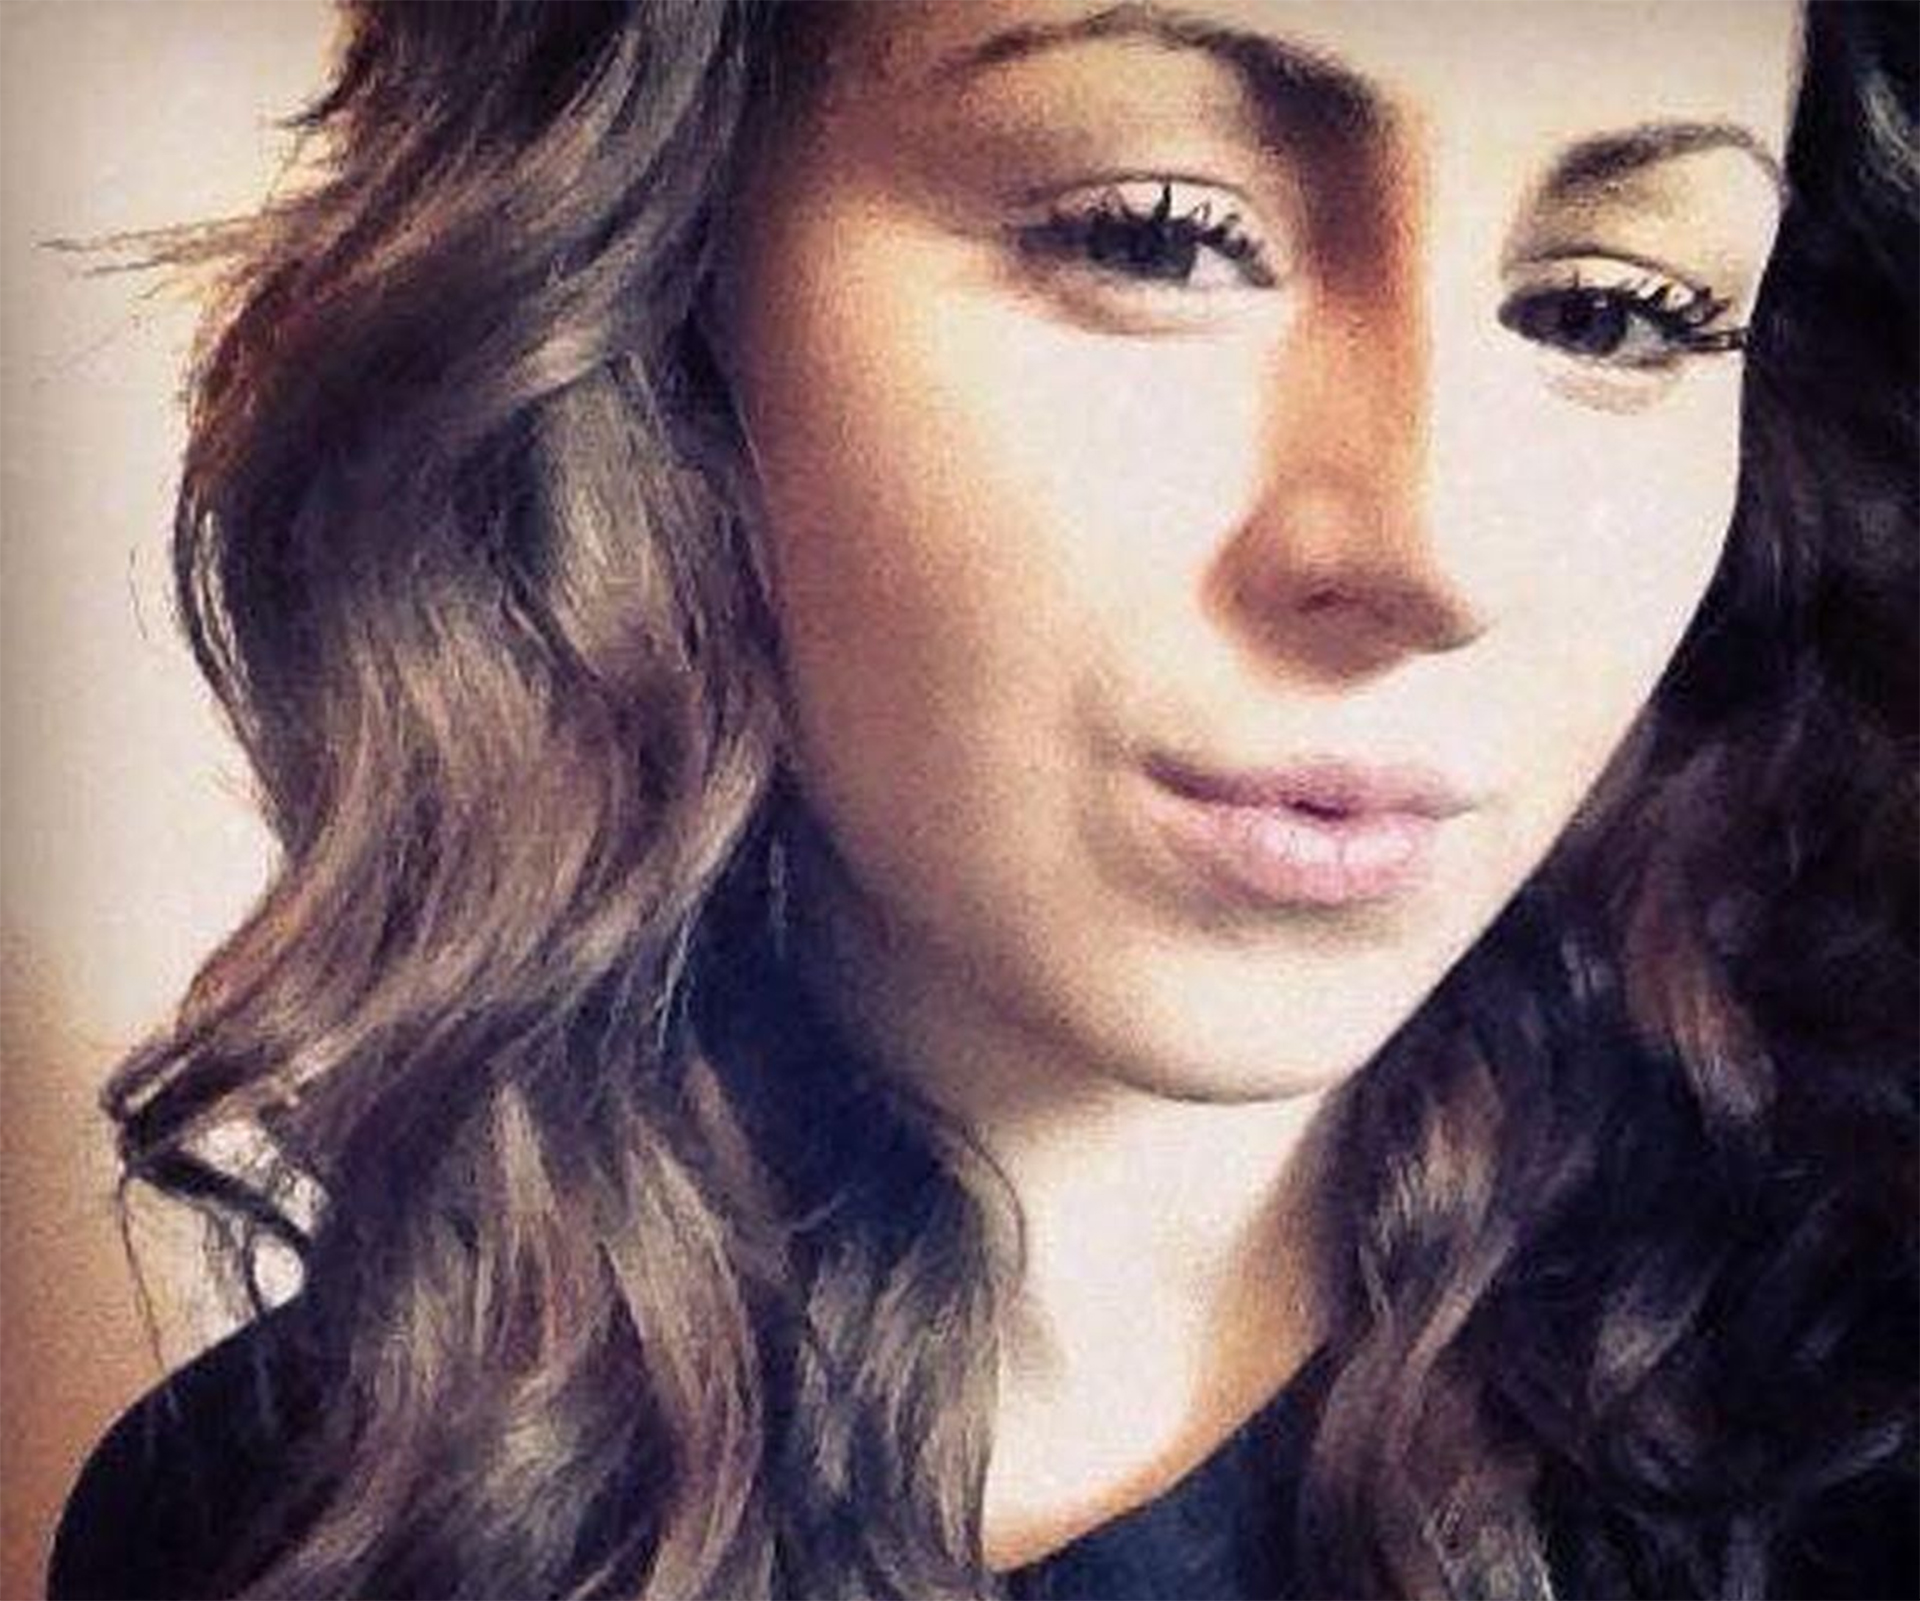 Teenager, 17, dies of painkiller overdose